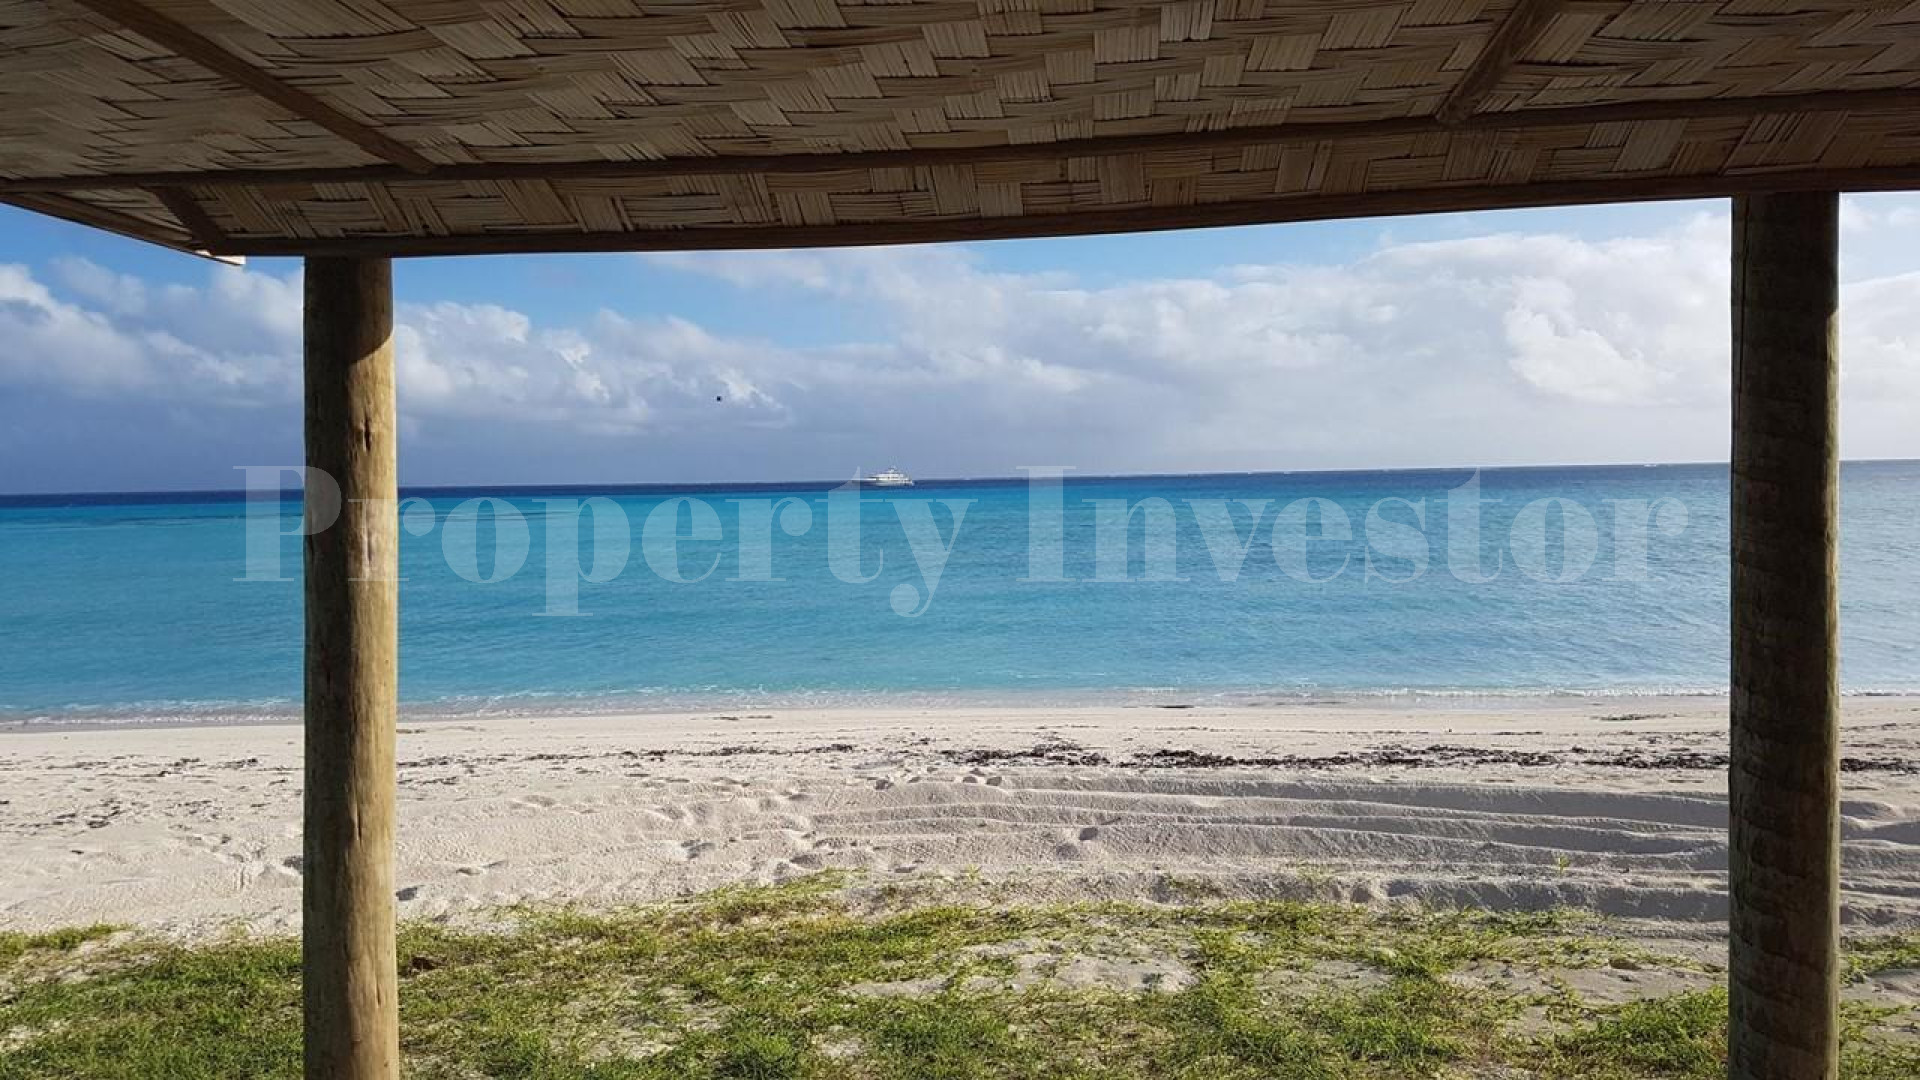 Picture Perfect 46 Hectare Private Island for Sale in Fiji